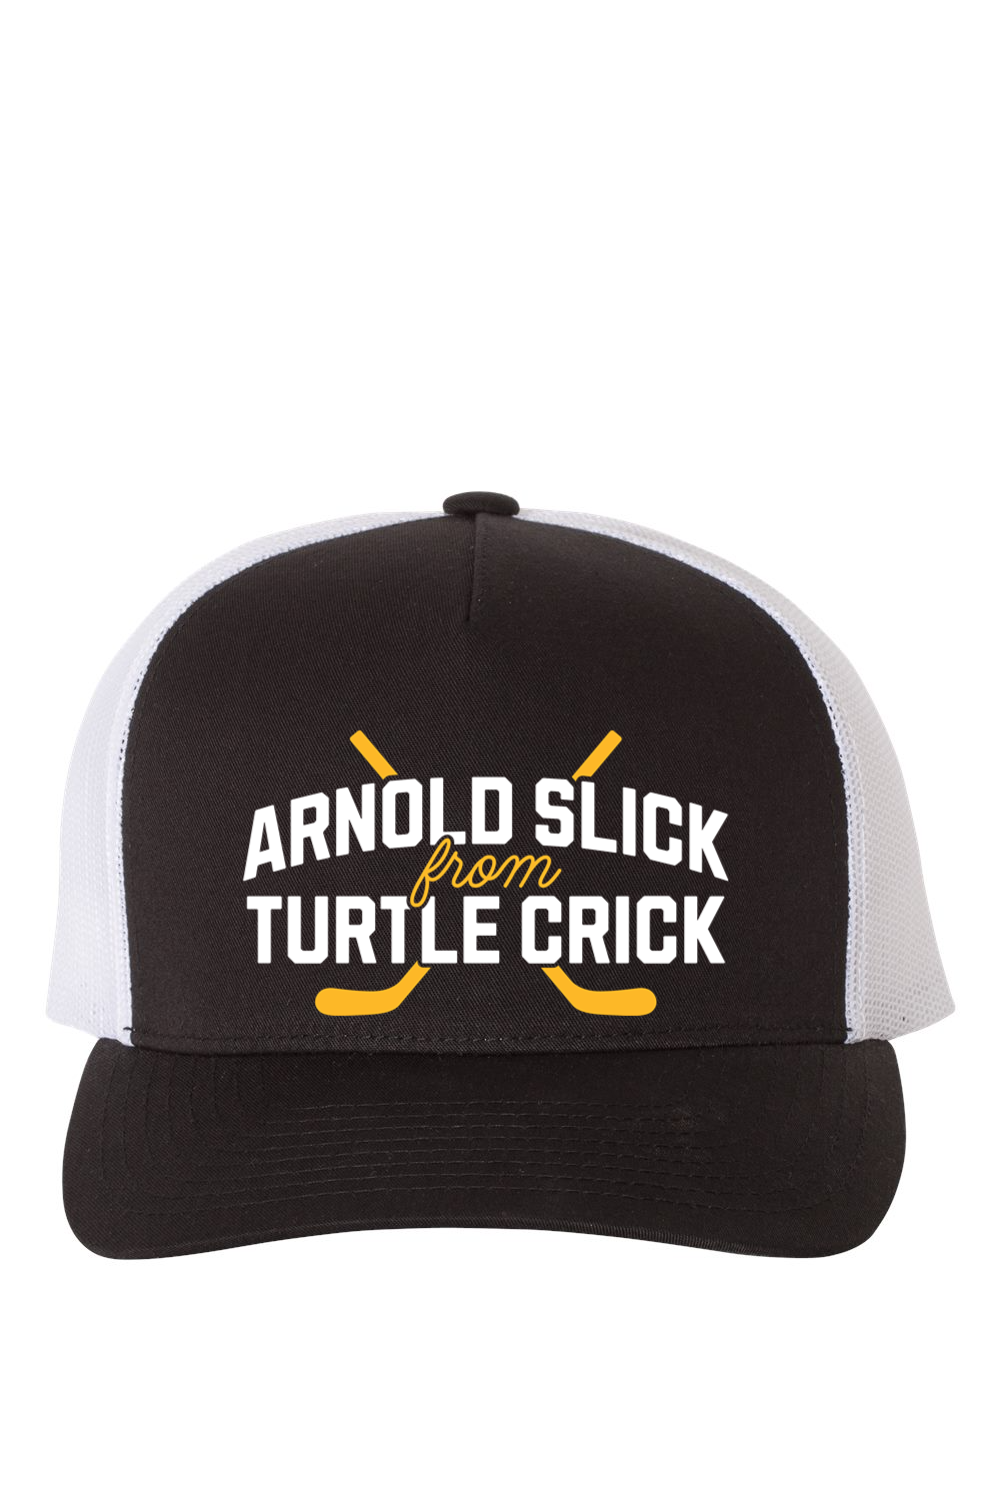 Arnold Slick from Turtle Crick - Classic Snapback Hat - Yinzylvania